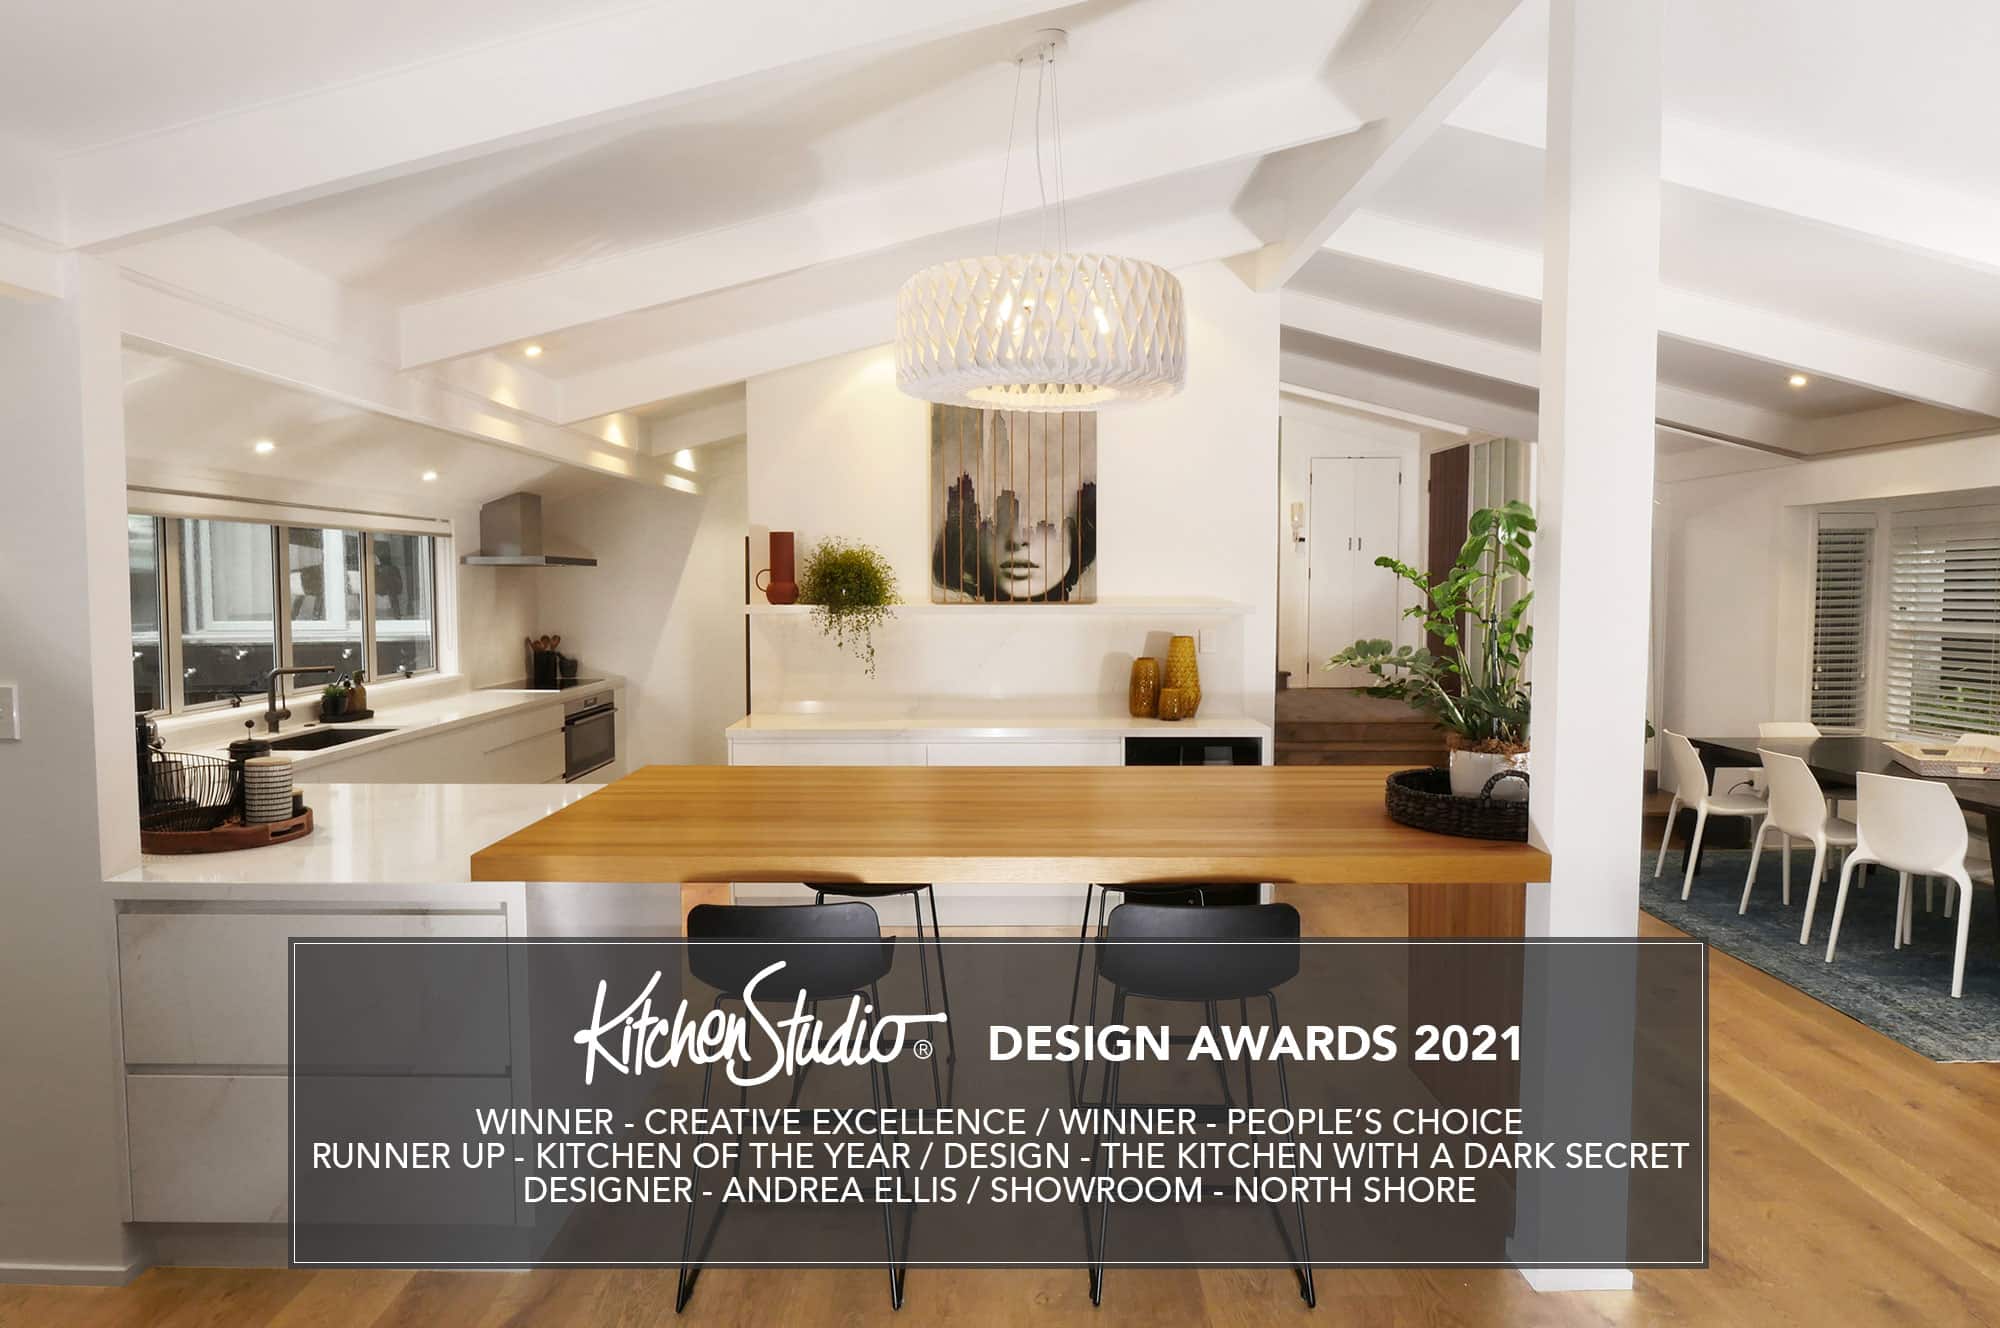 Creative Excellence & People's Choice - Award Winning Kitchen Design 2021 - Kitchen Studio - Andrea Ellis